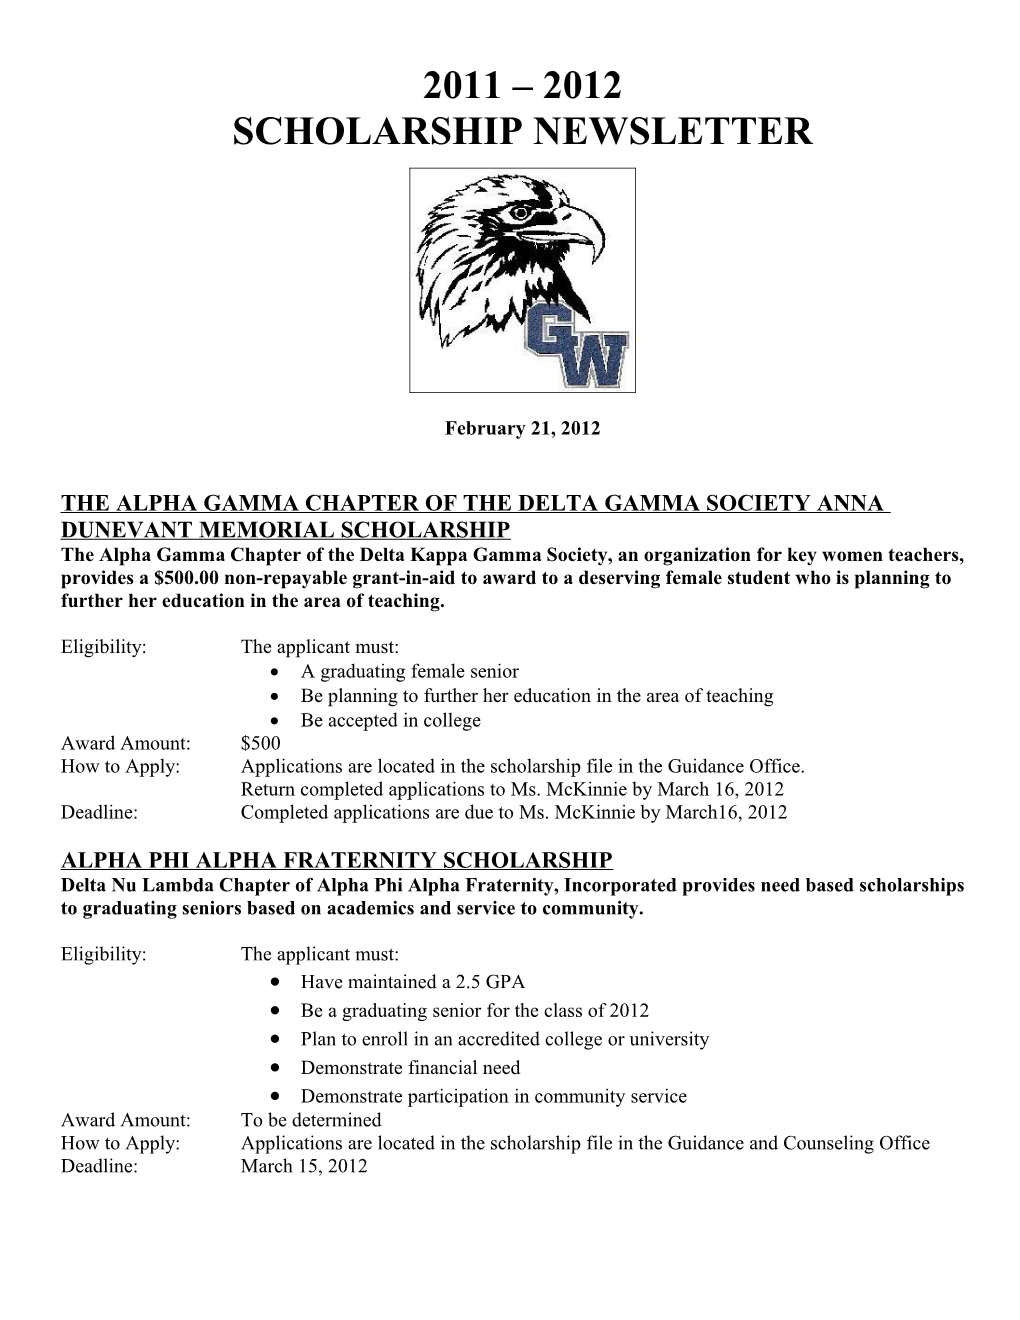 The Alpha Gamma Chapter of the Delta Gamma Society Anna Dunevant Memorial Scholarship